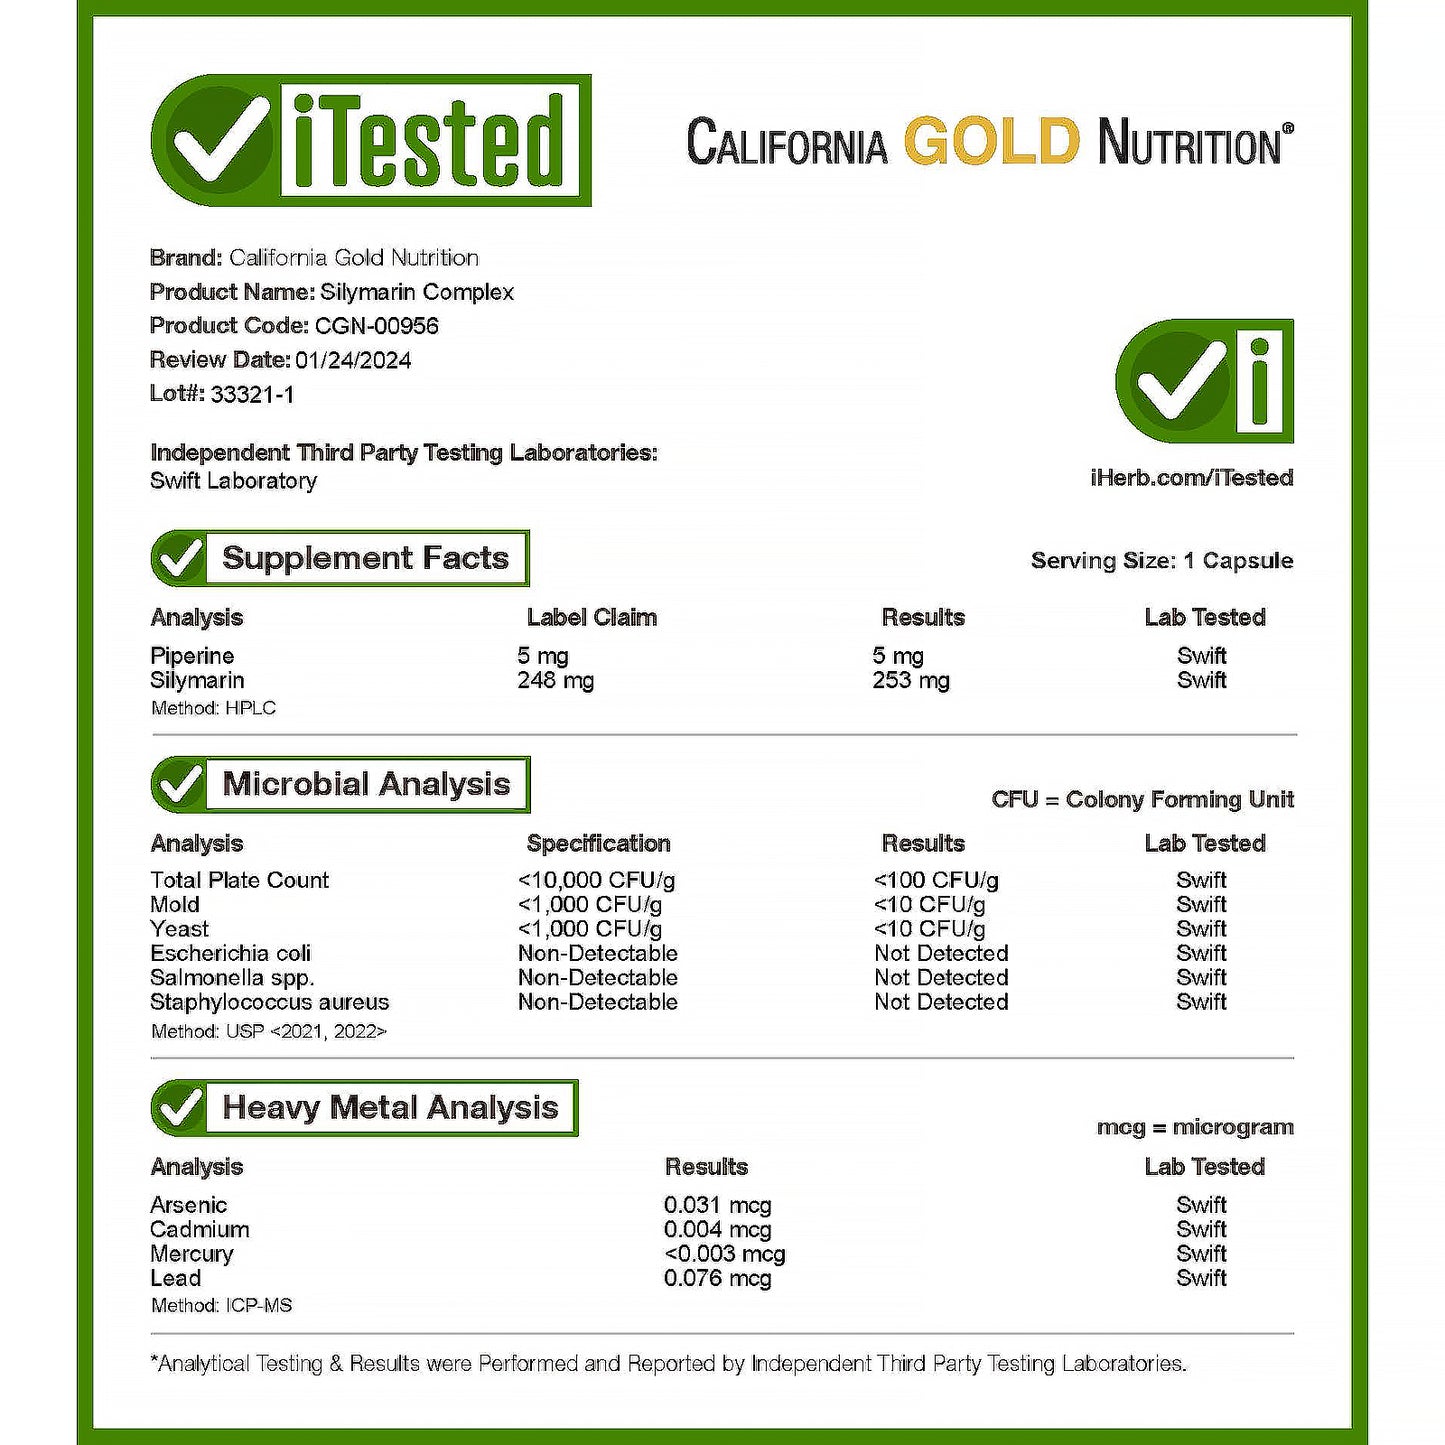 California Gold Nutrition, Silymarin Complex, Milk Thistle Extract Plus Dandelion, Artichoke, Curcumin C3 Complex, Ginger, and BioPerine, 120 Veggie Capsules